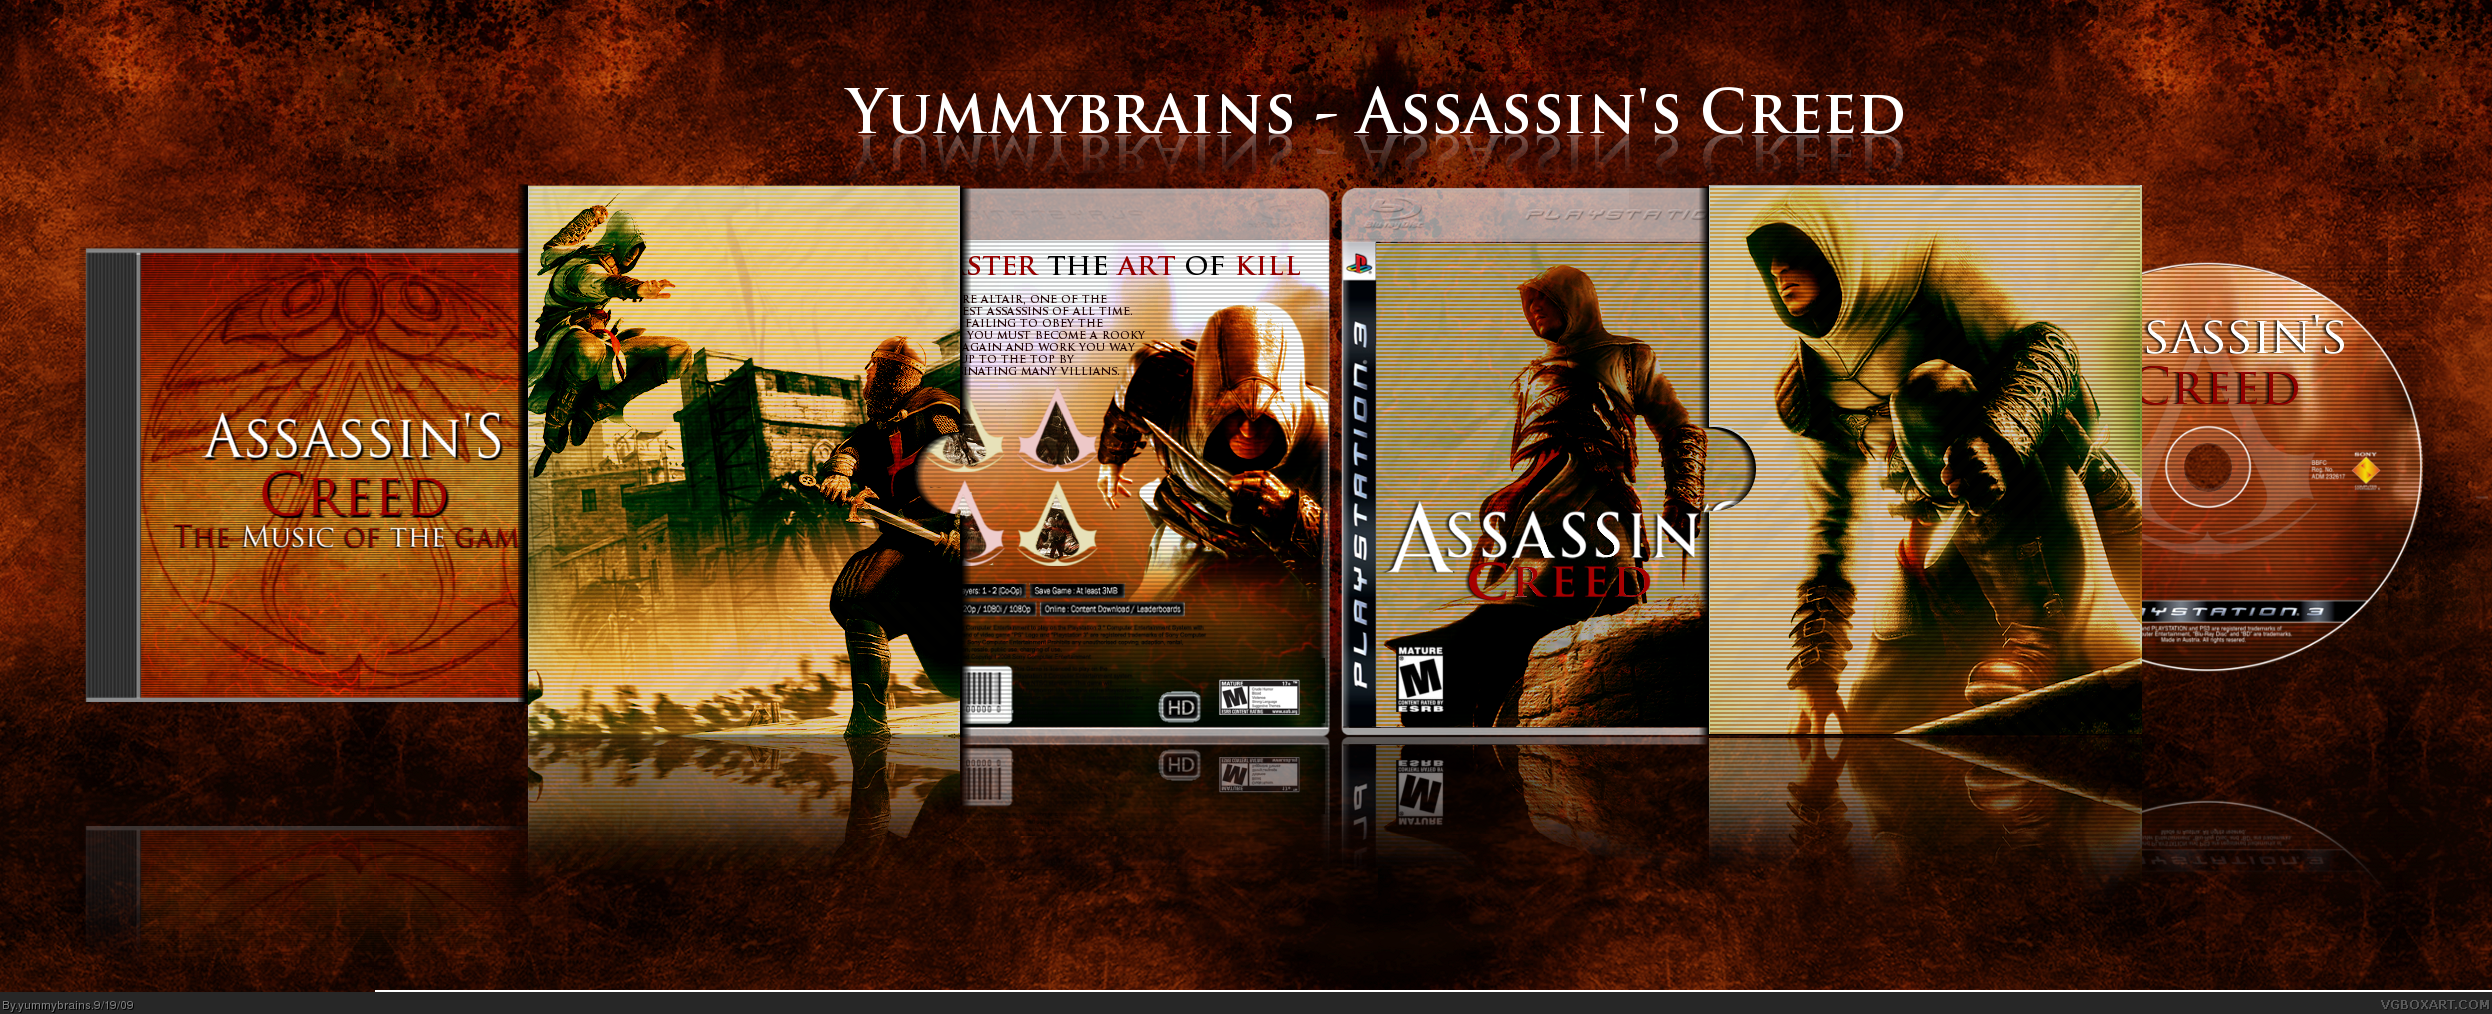 Assassin's Creed: Collectors Edition box cover